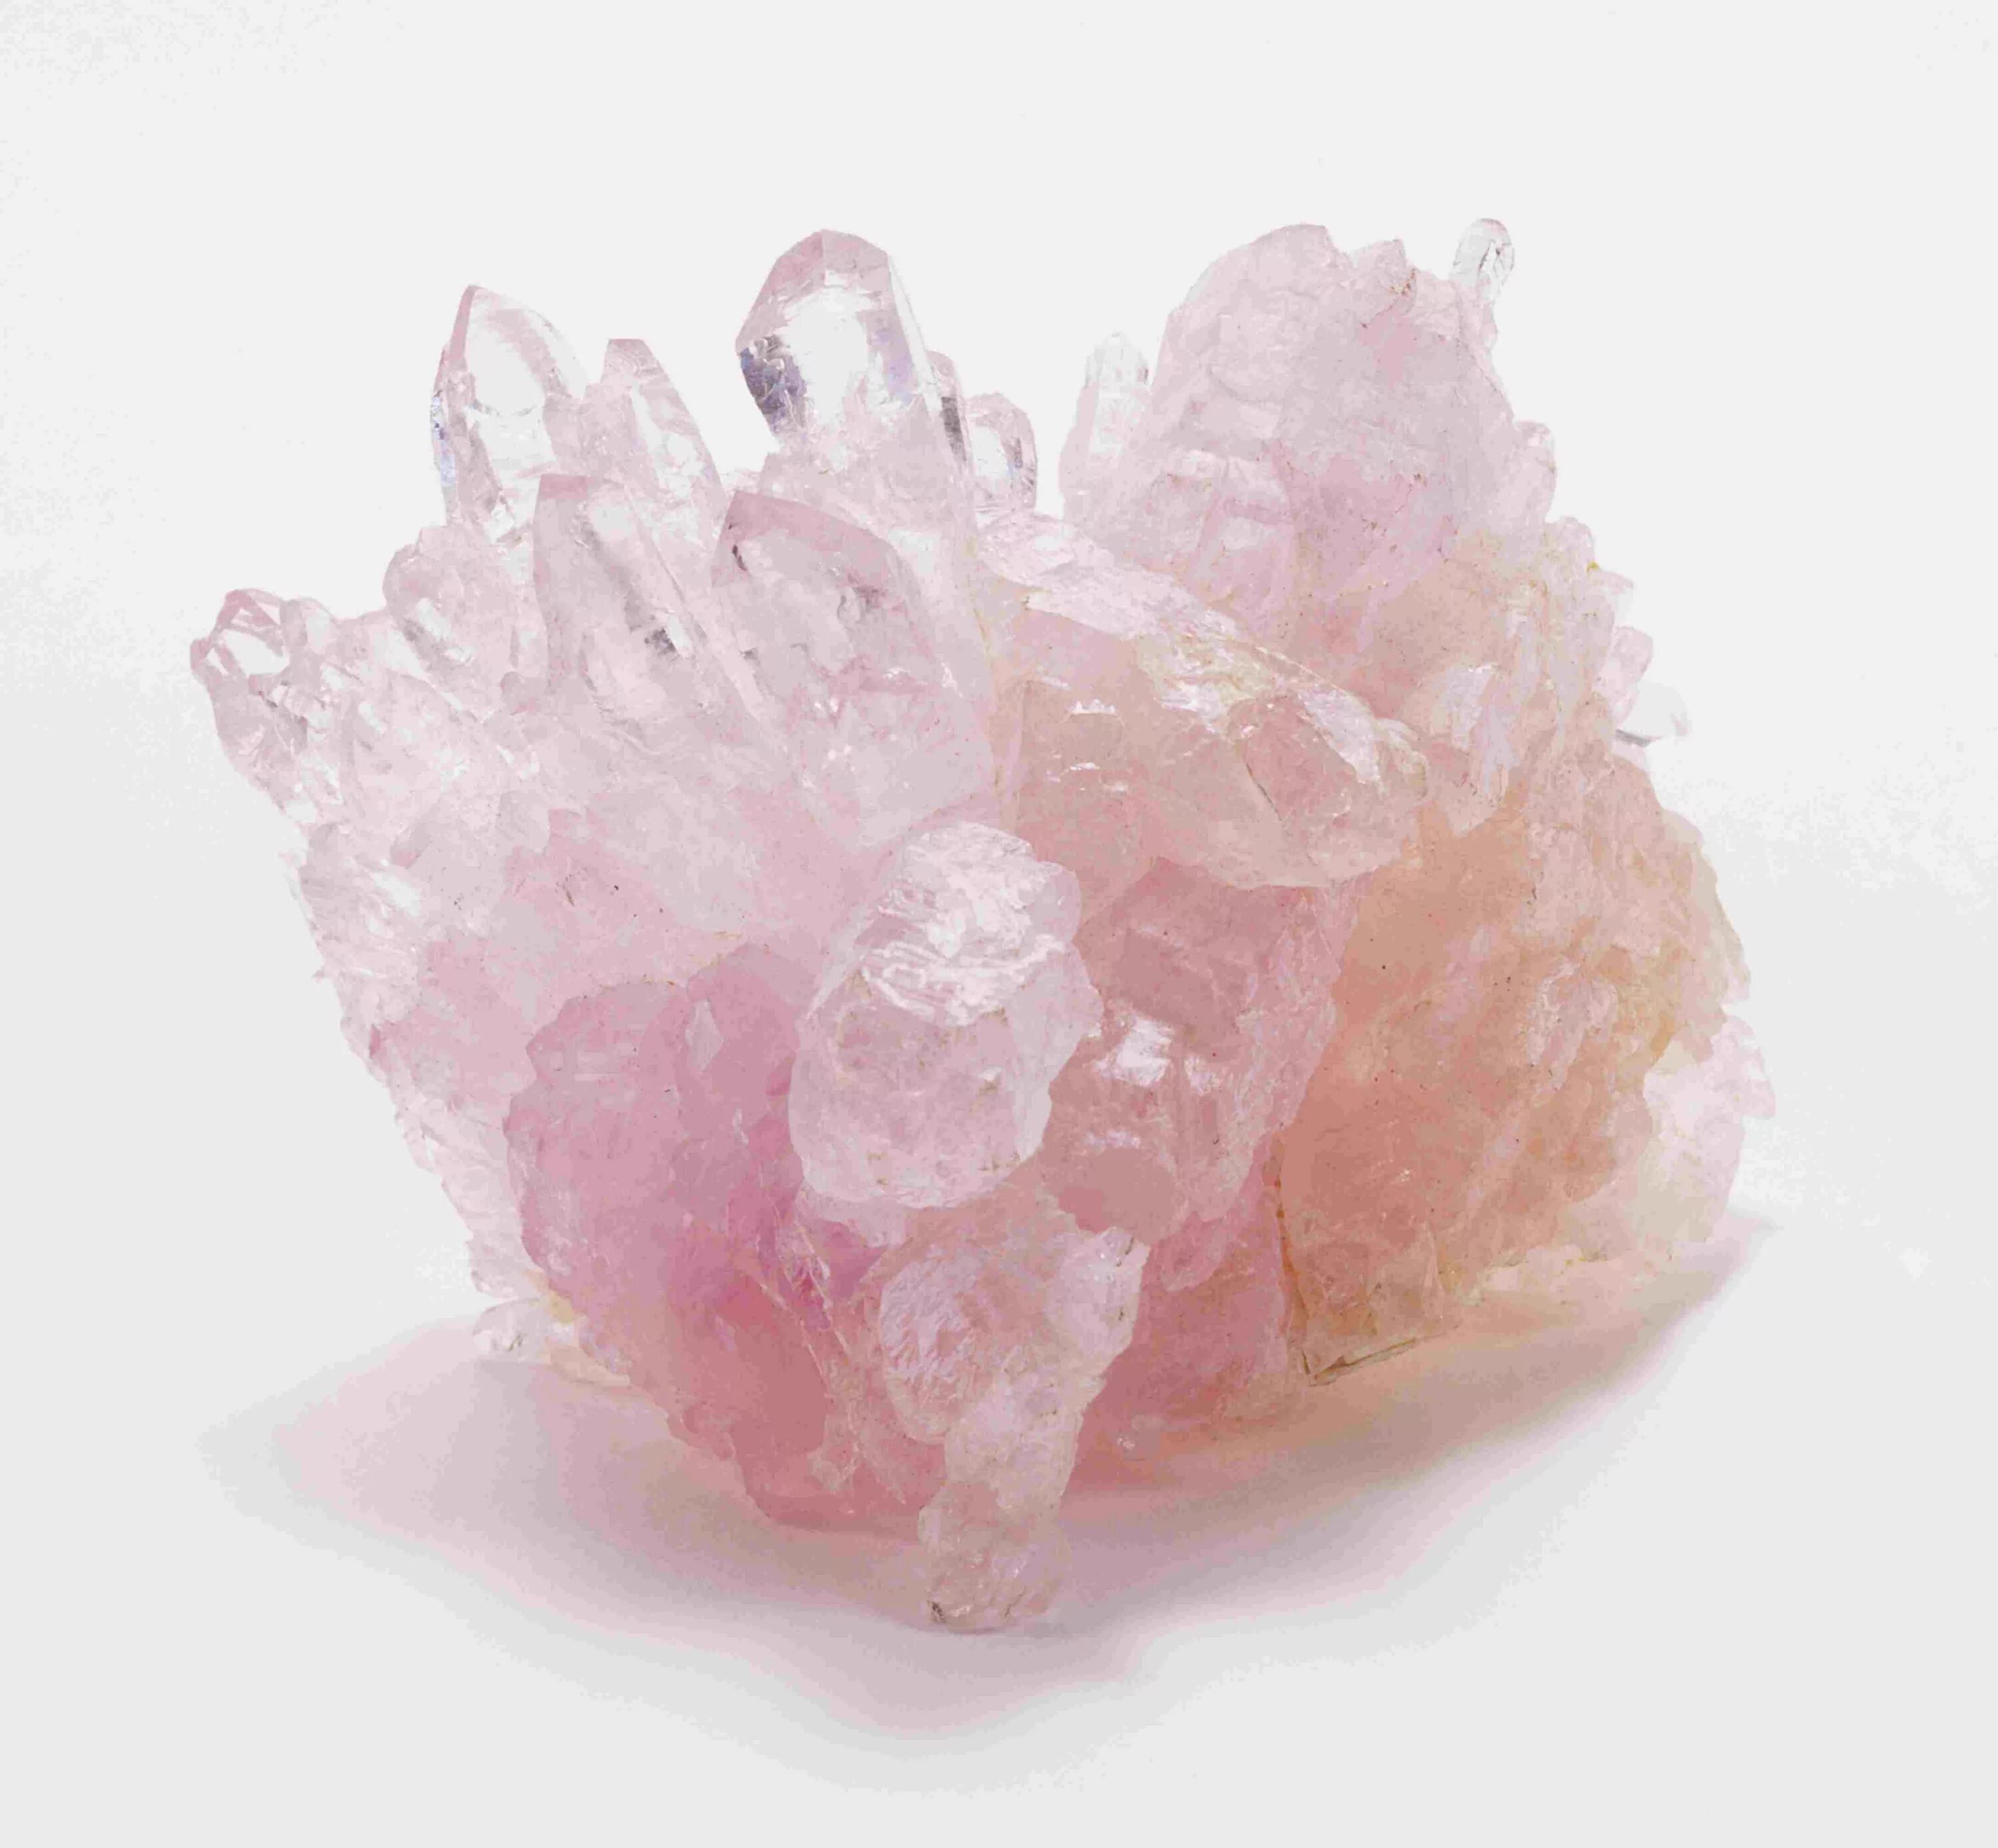 САМОЦВЕТ Rose Quartz - Роуз кварц. Розовый кварц Кристалл. Амулет Кристалл розовый кварц. Розовый аметист Кристалл. Розовый кварц для чего